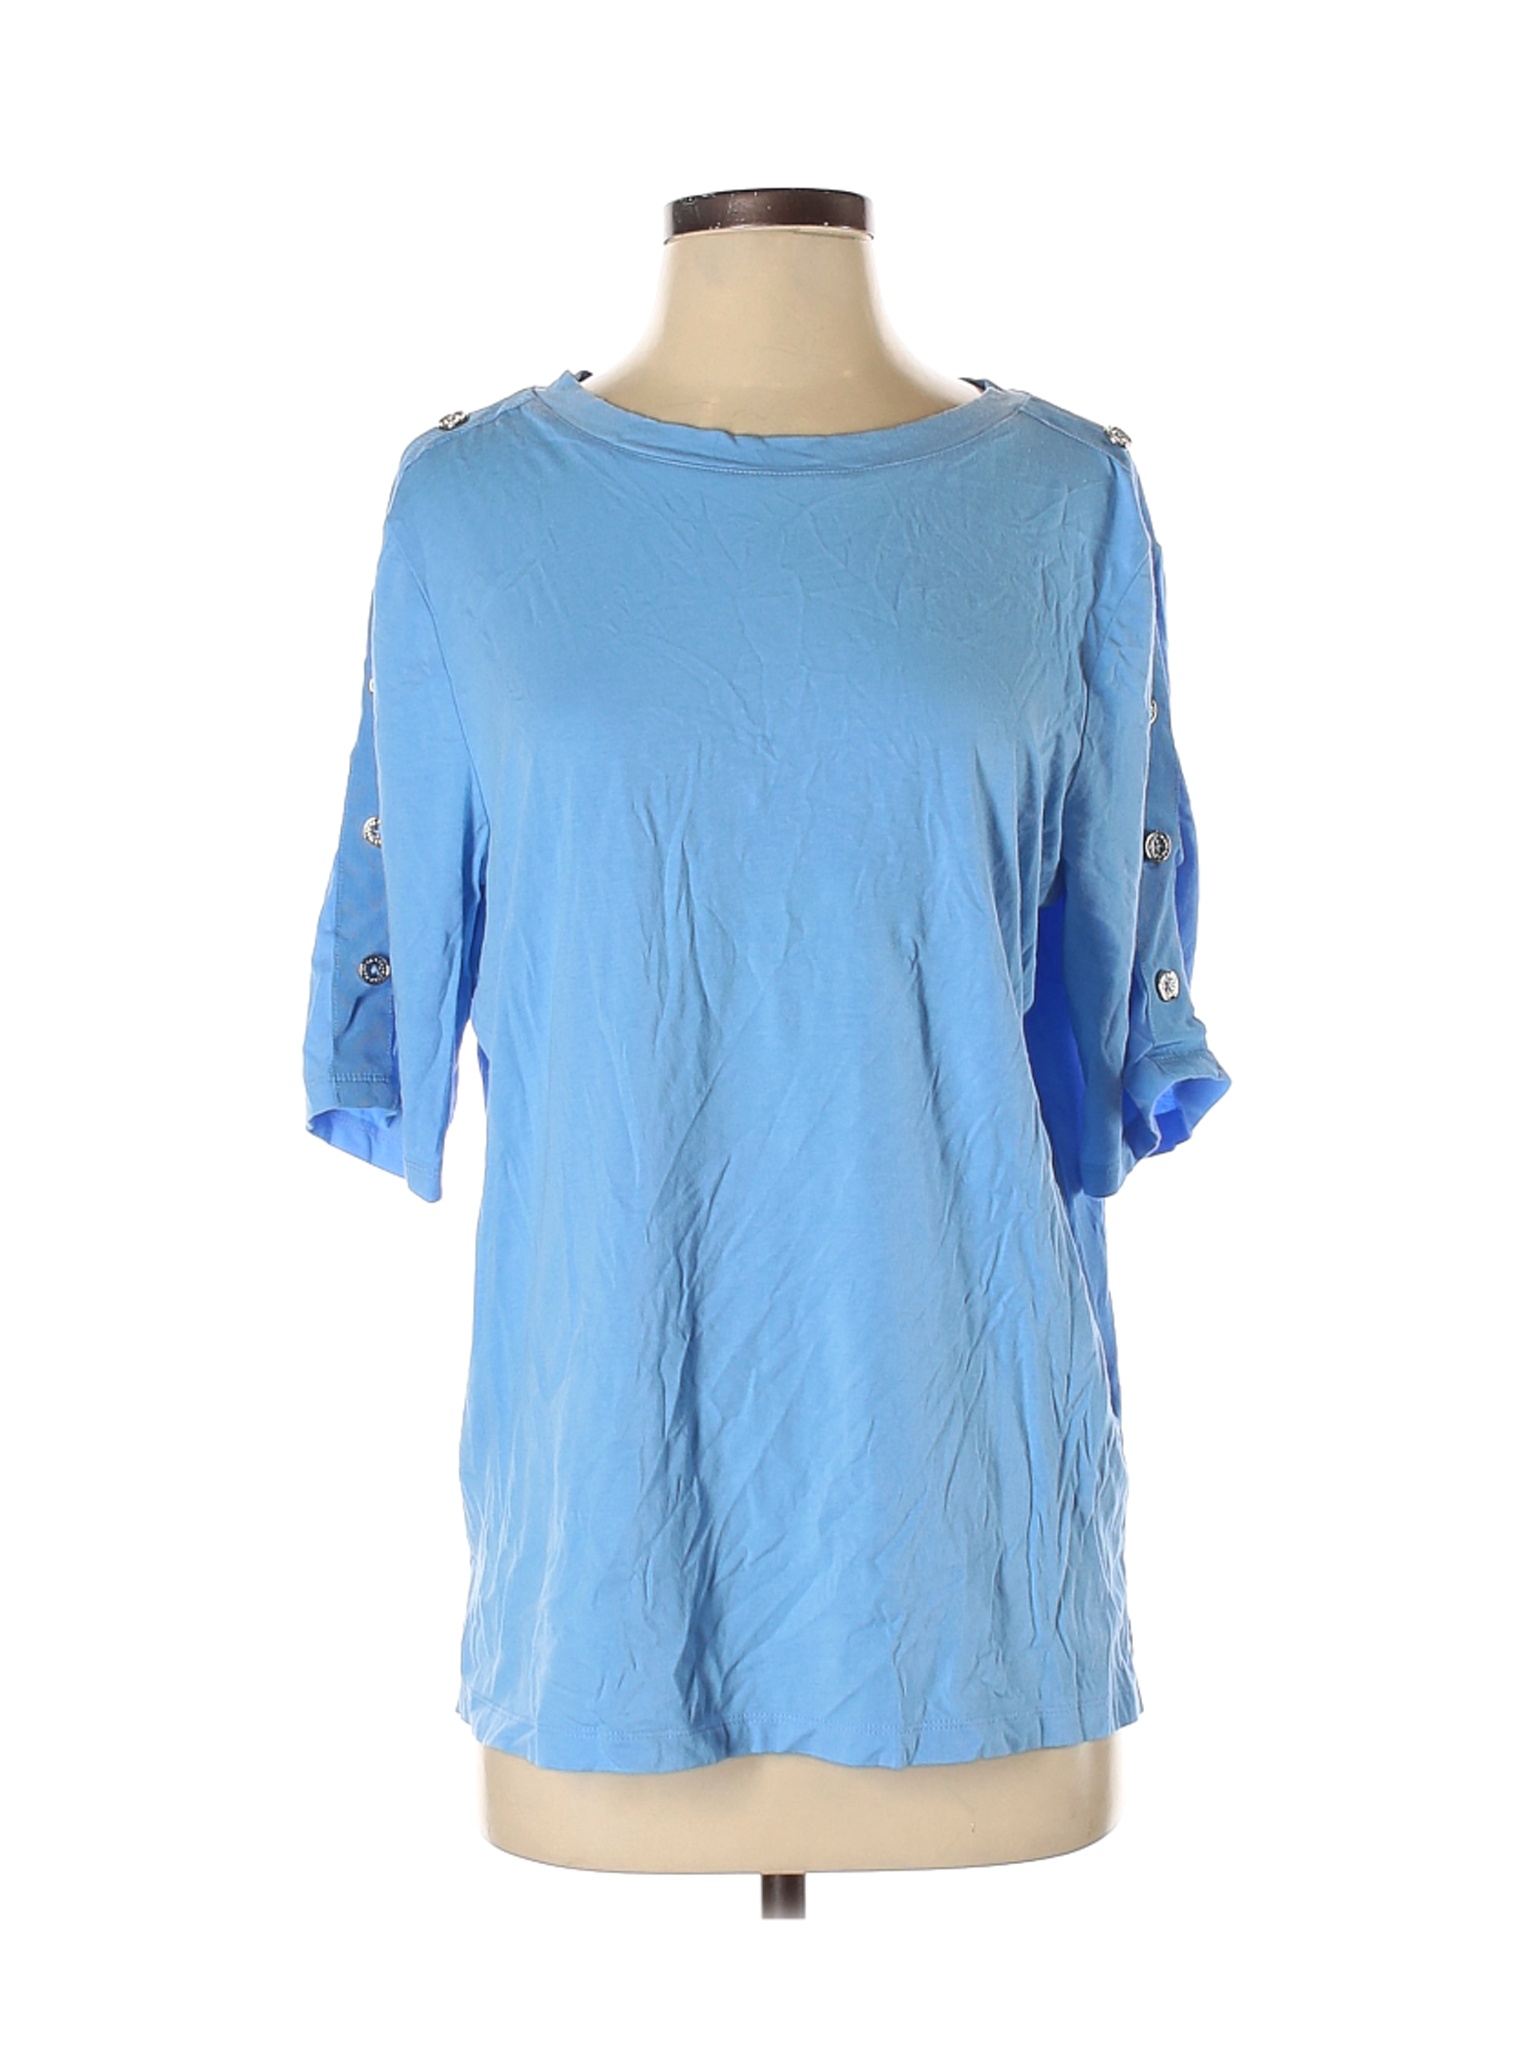 Martha Stewart Women Blue Short Sleeve Top S | eBay